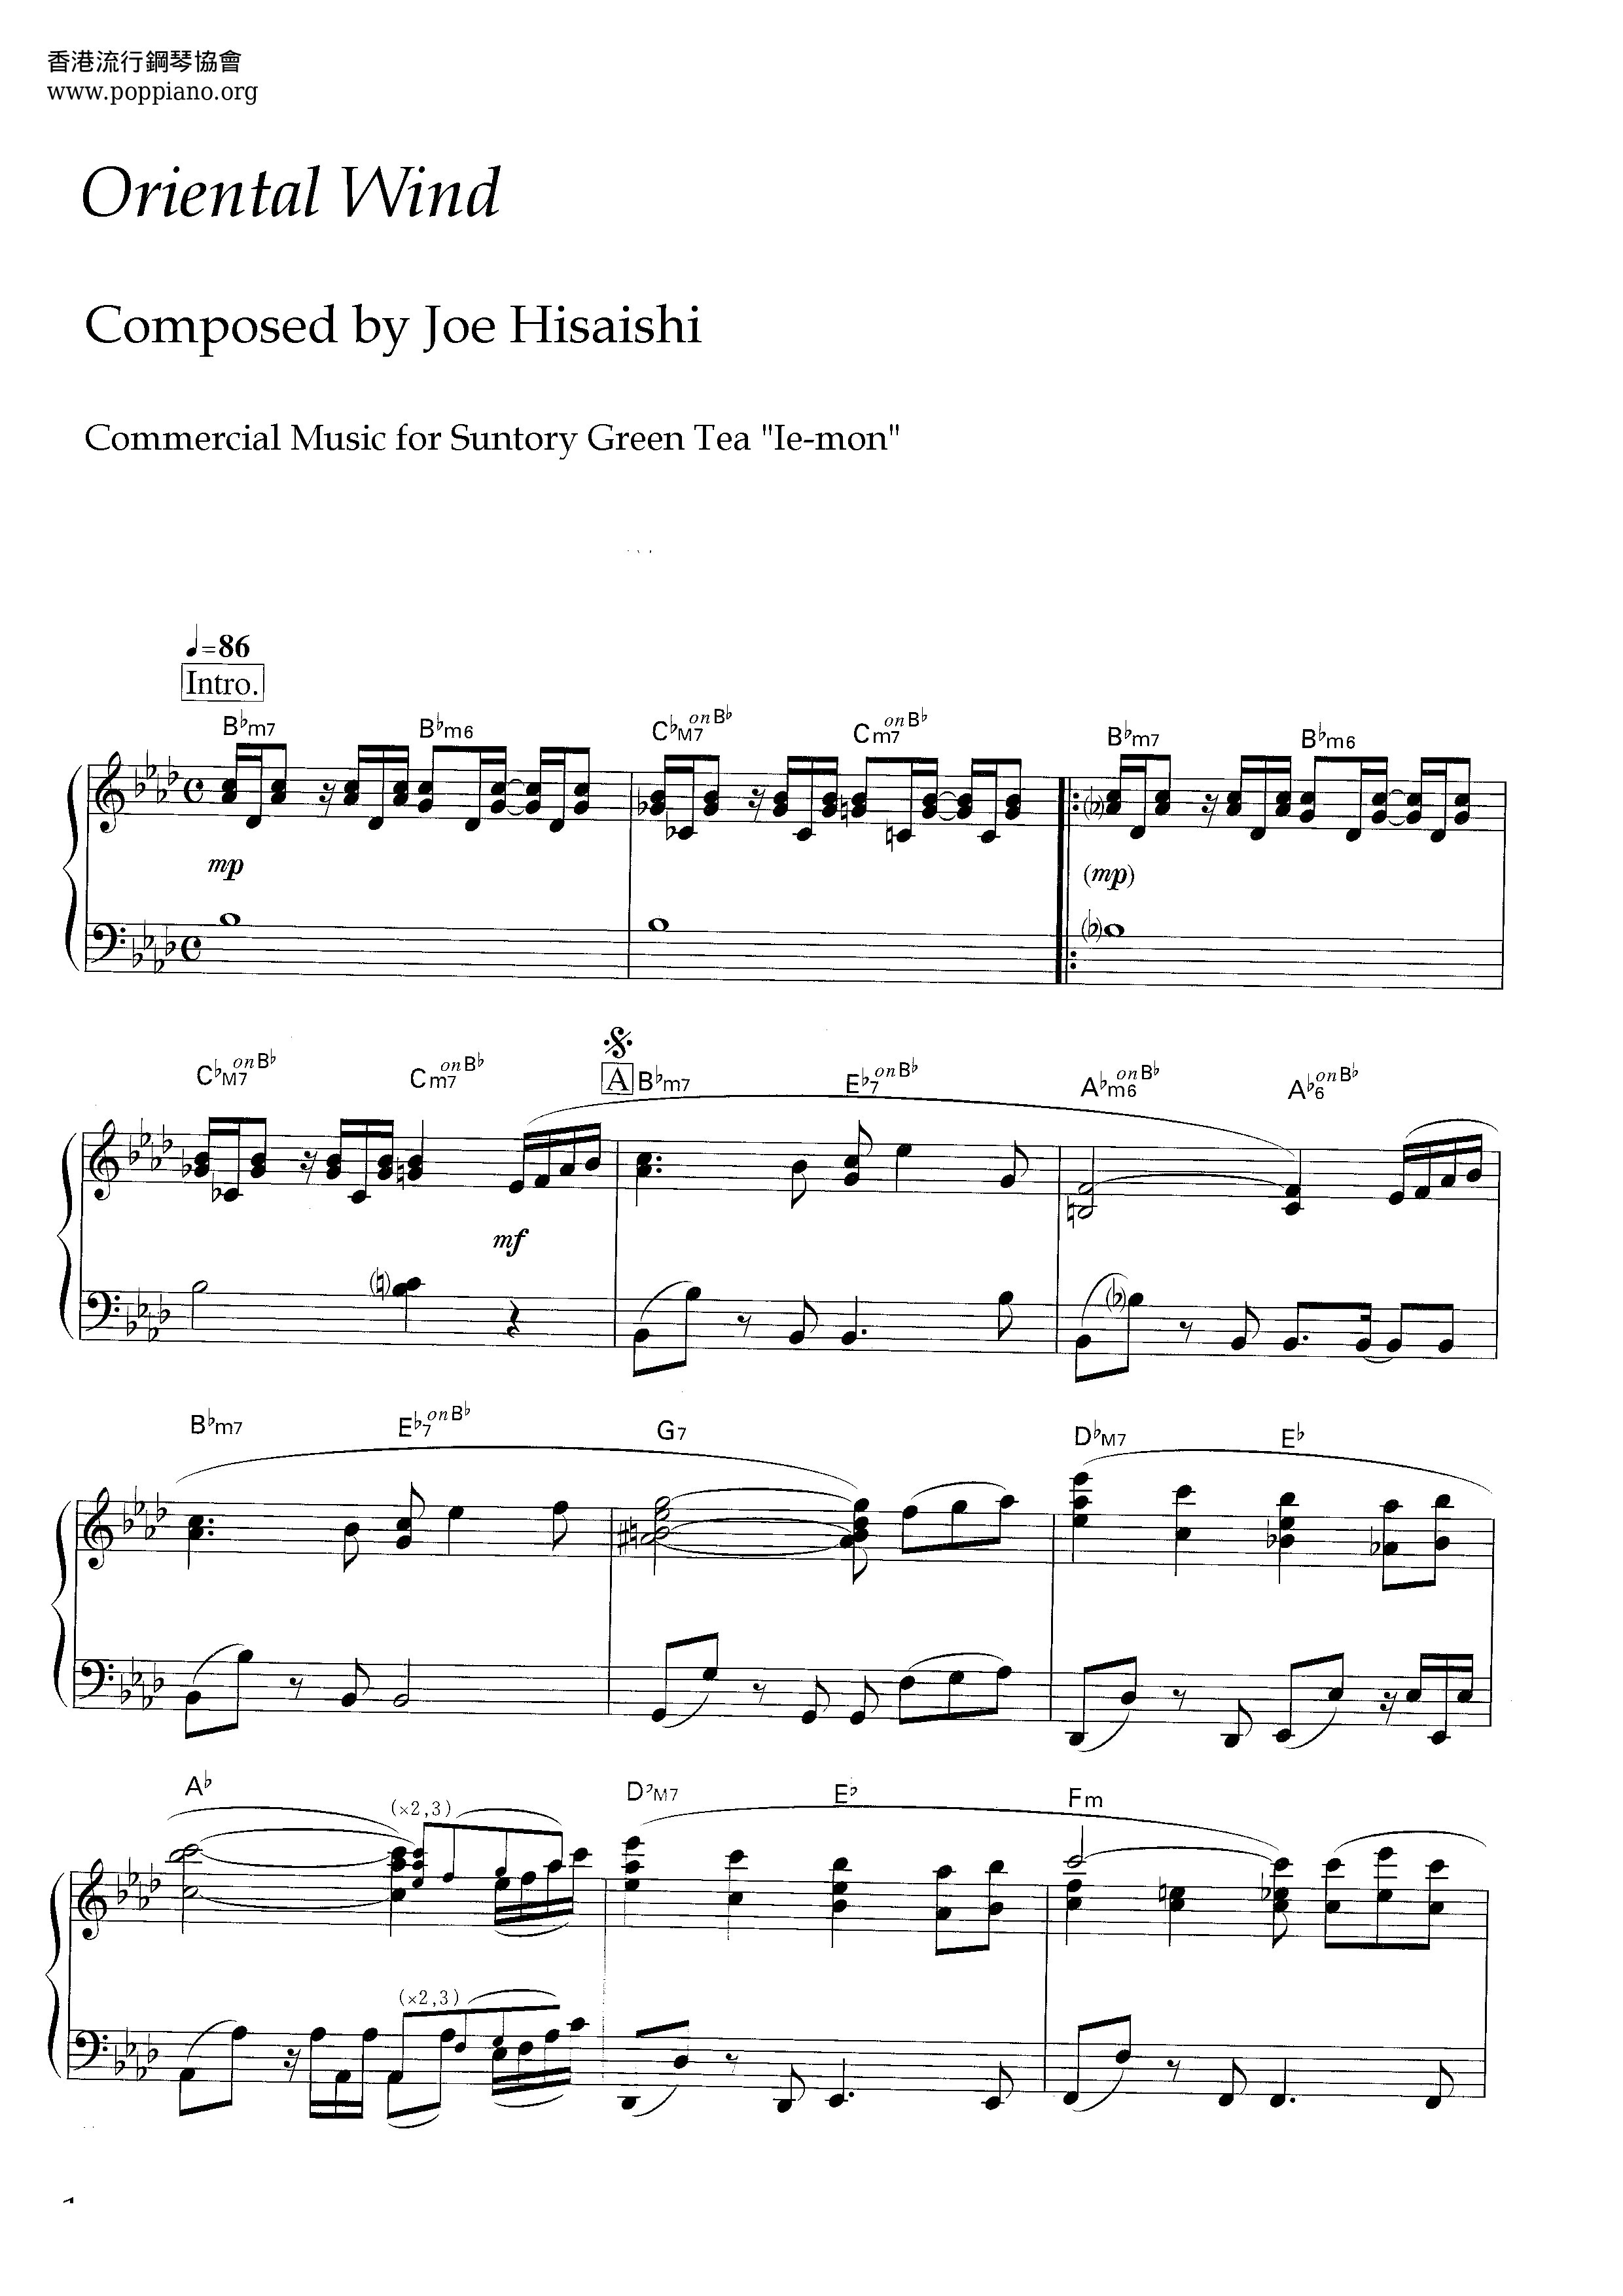 Oriental Windピアノ譜